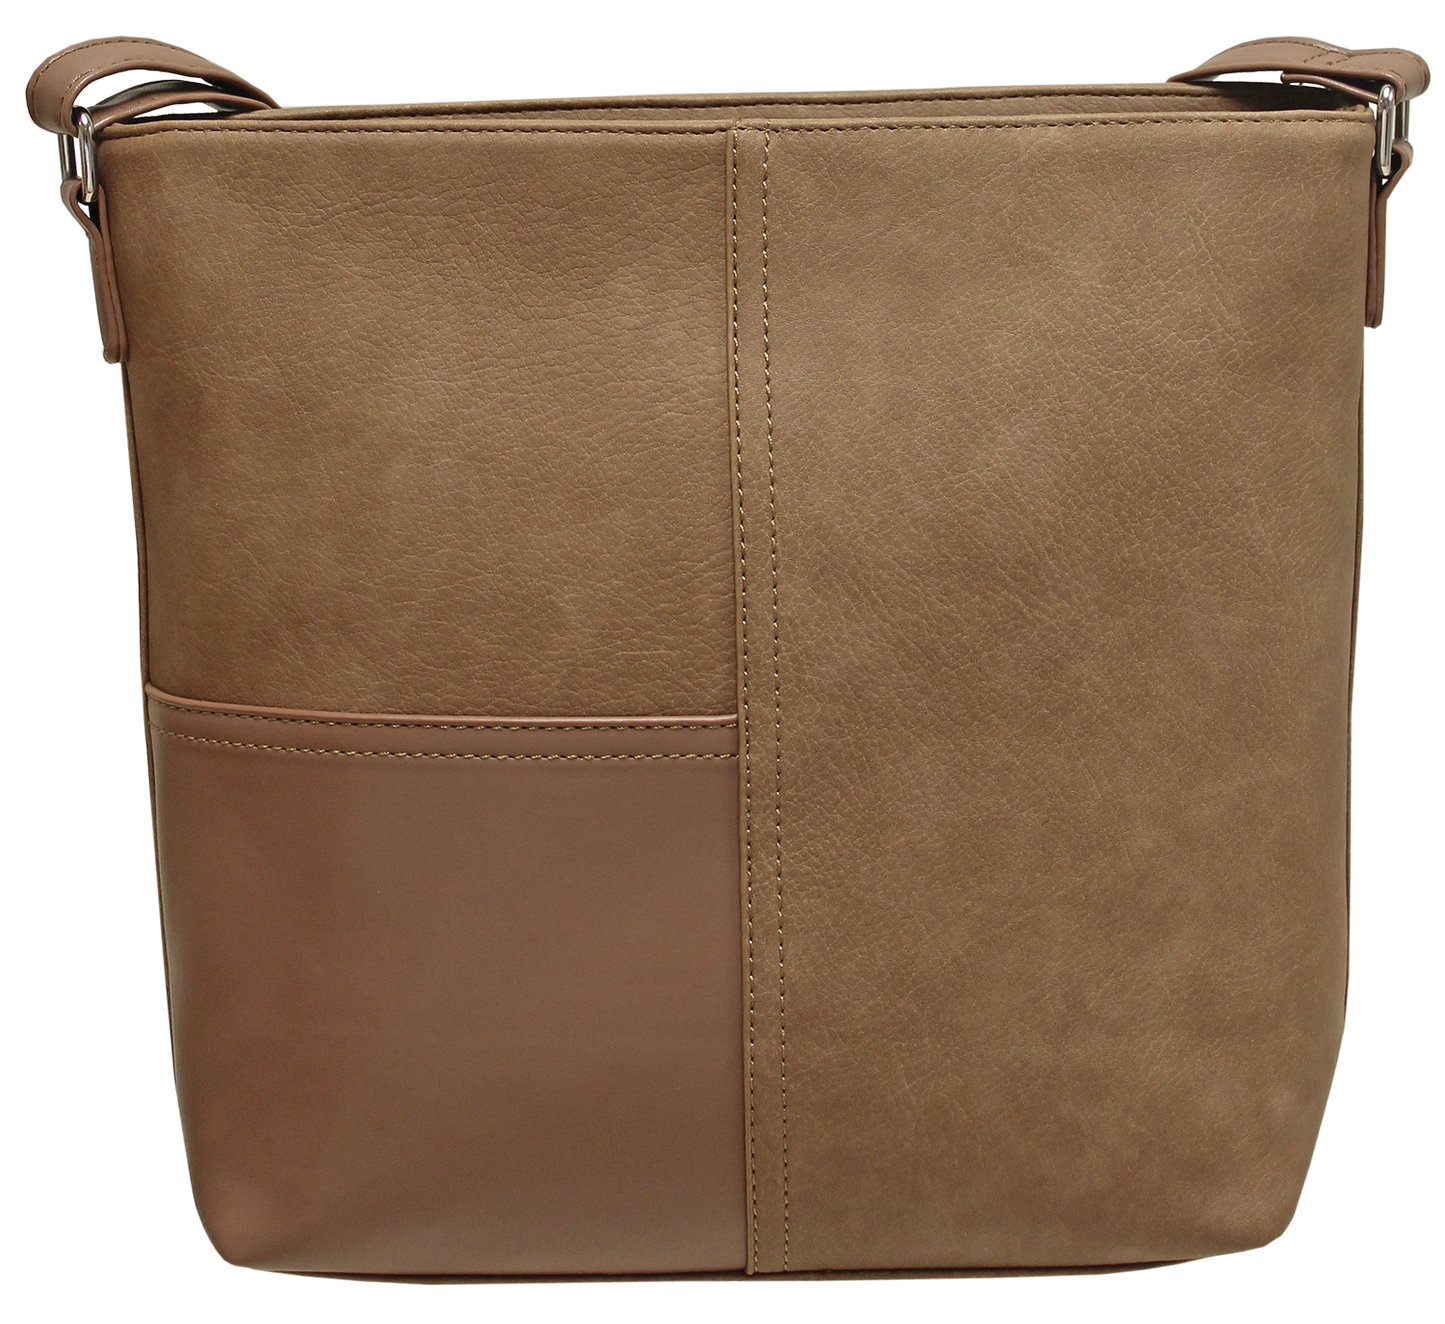 Envy 942 classic style shoulder bag